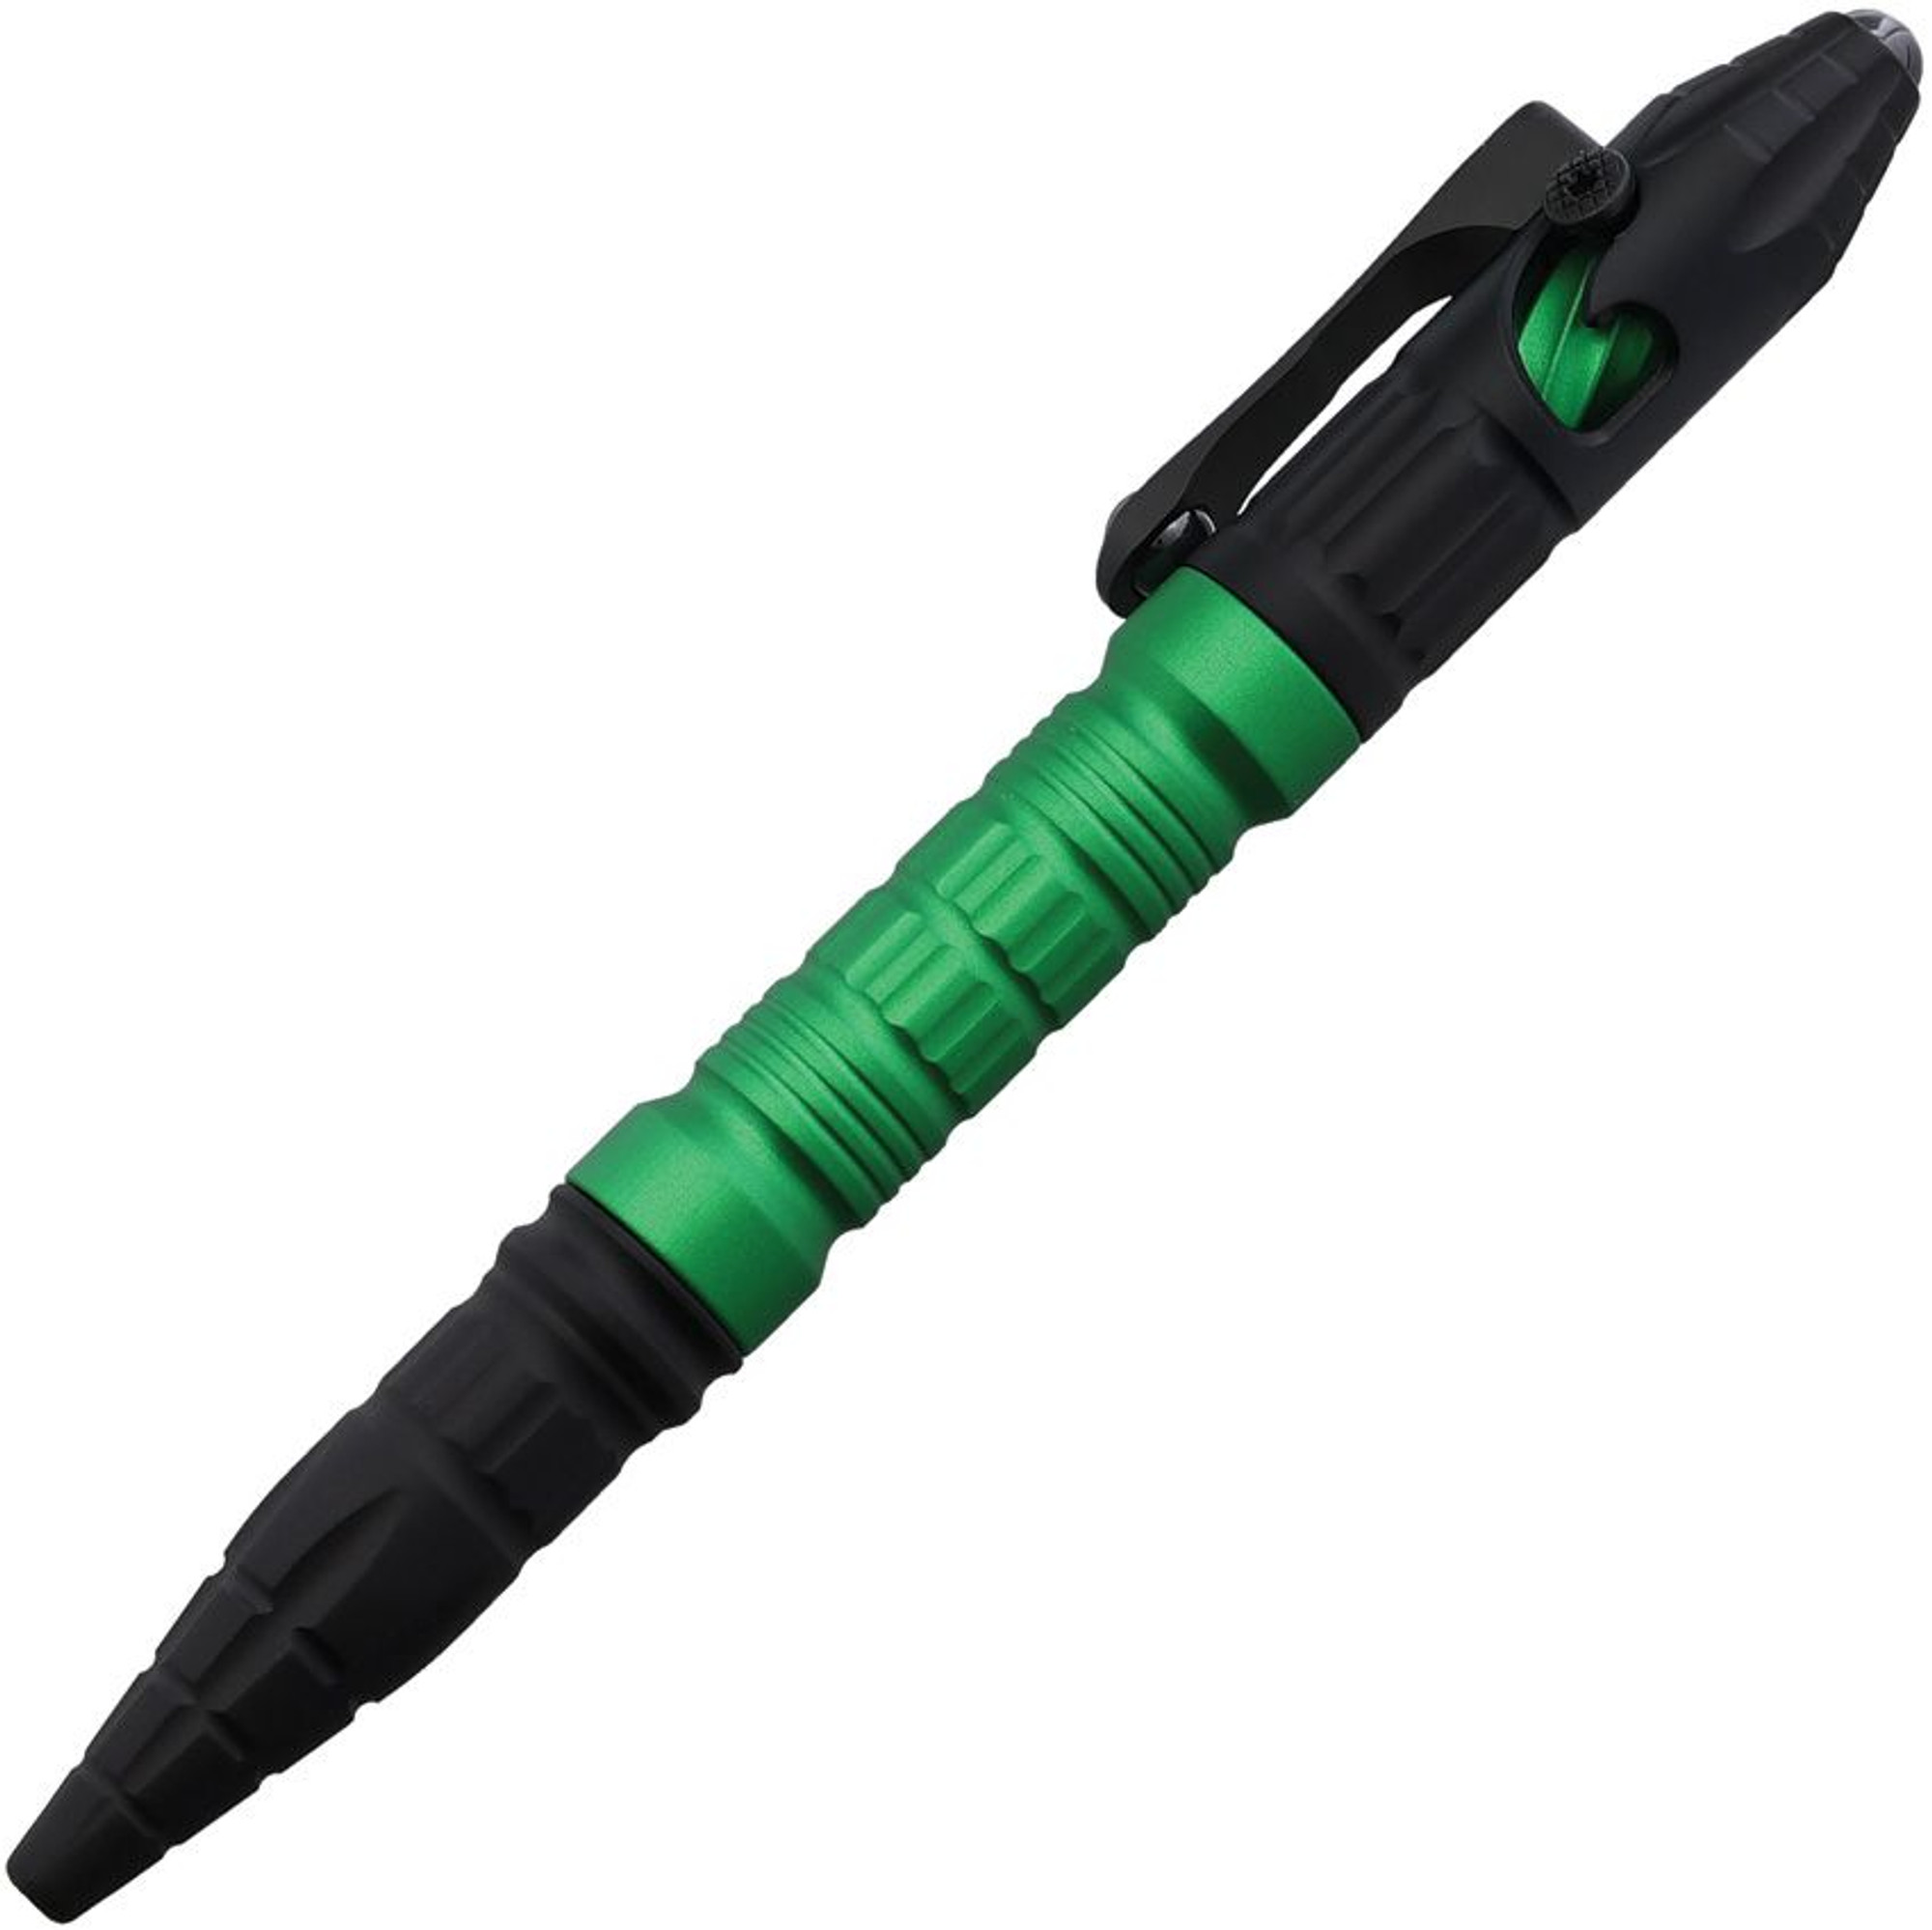 Thoth Tactical Pen Green